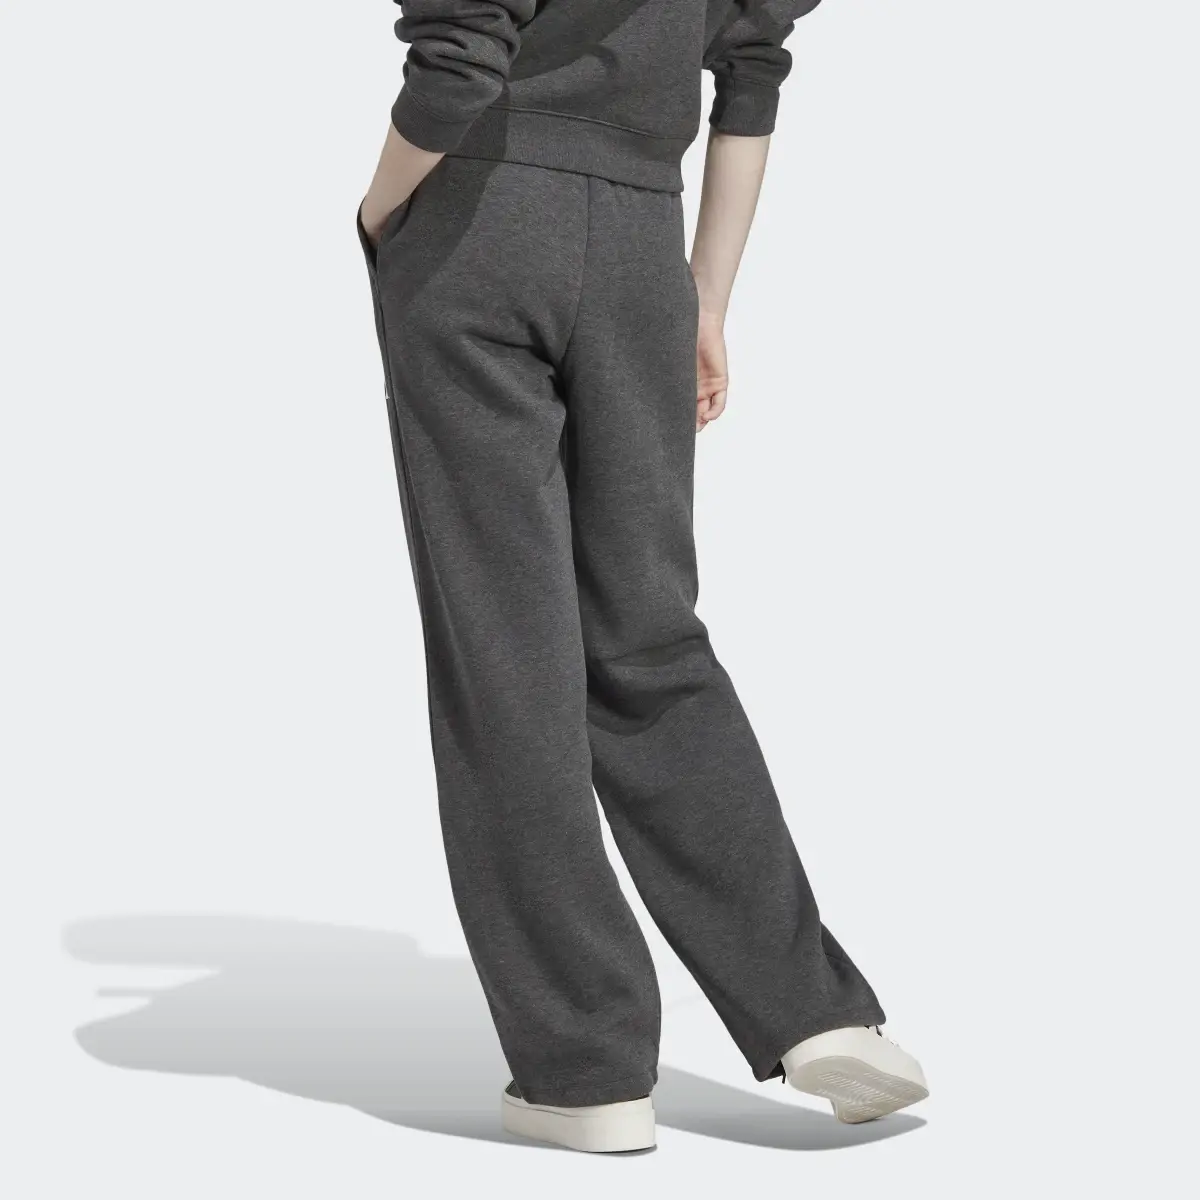 Adidas Calças de Perna Larga adidas Originals x Moomin. 2